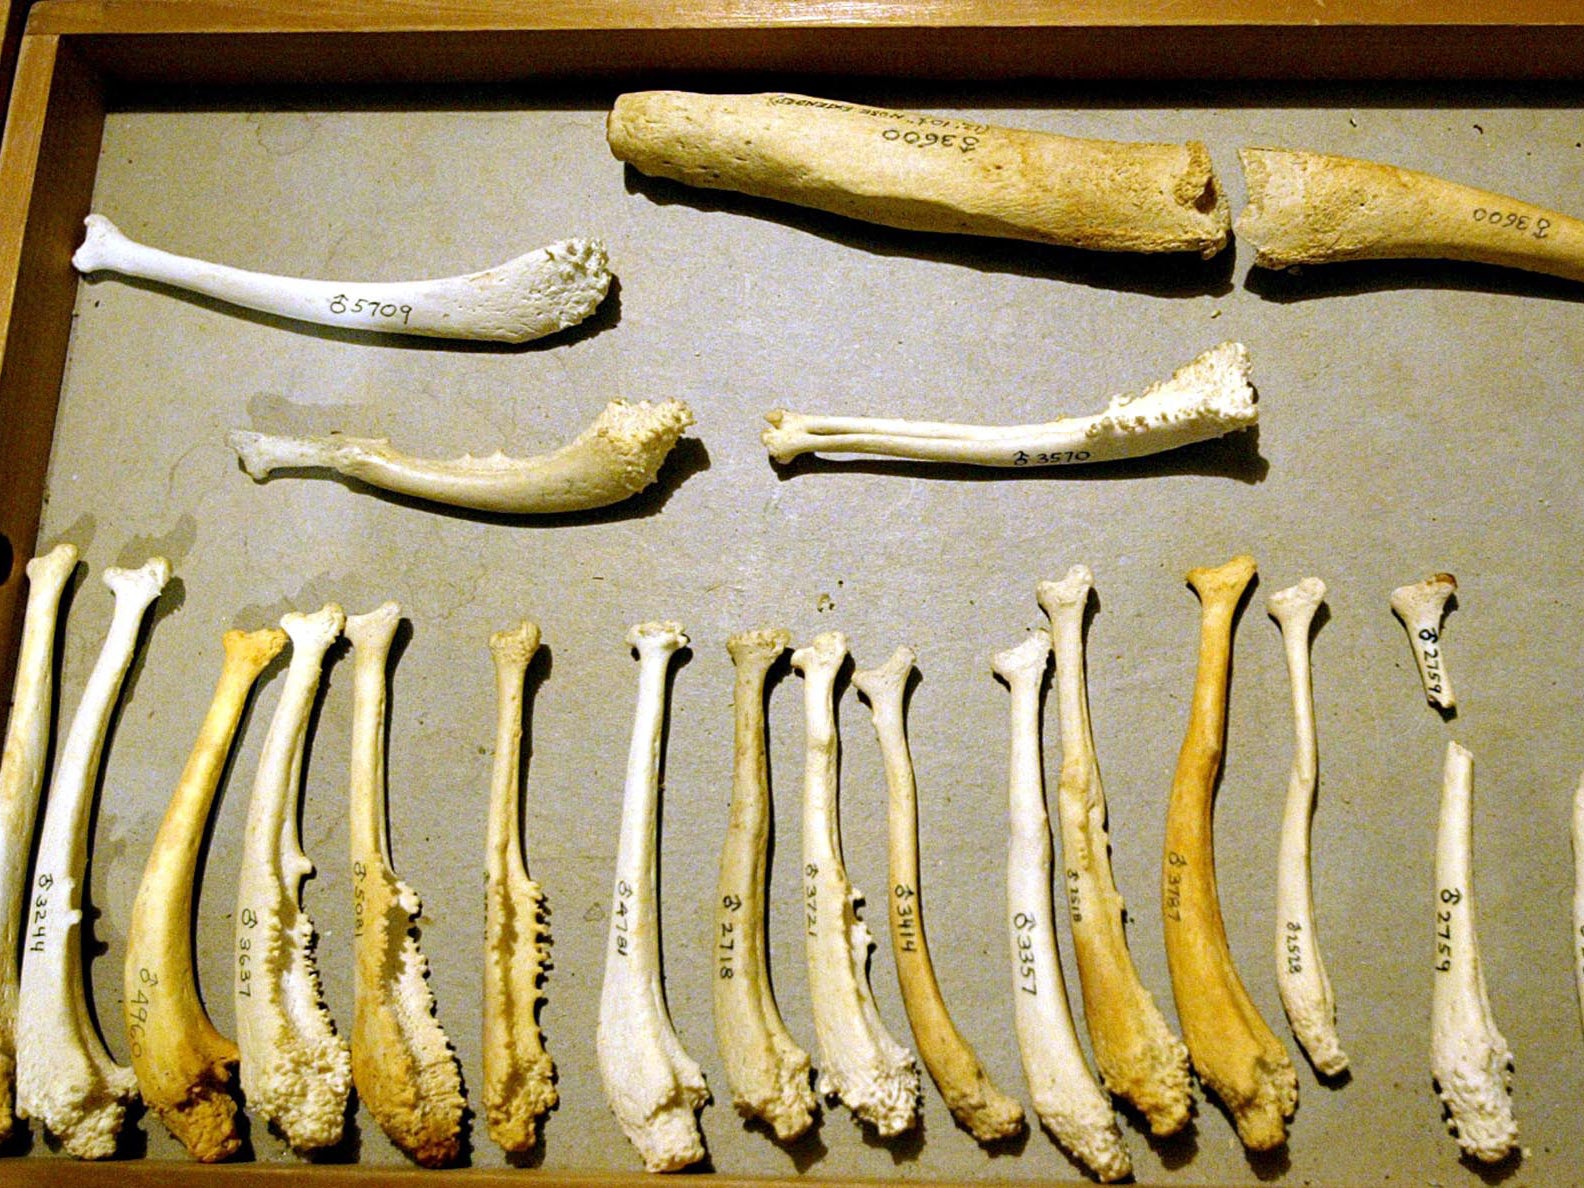 Penis bones from various mammals